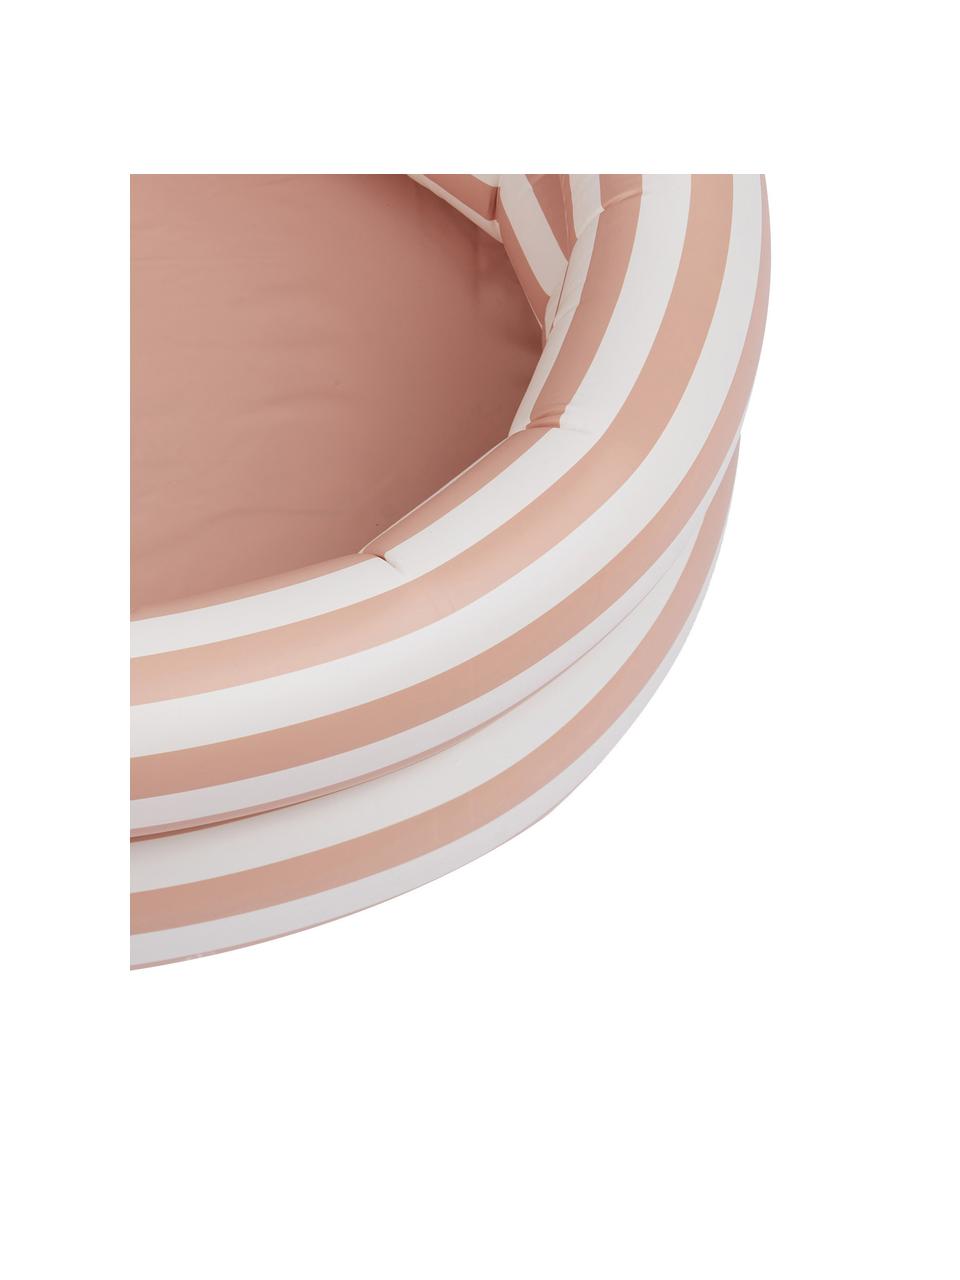 Kinderzwembad Leonore in roze/wit, Kunststof (PCV), Roze, wit, Ø 80 x H 20 cm